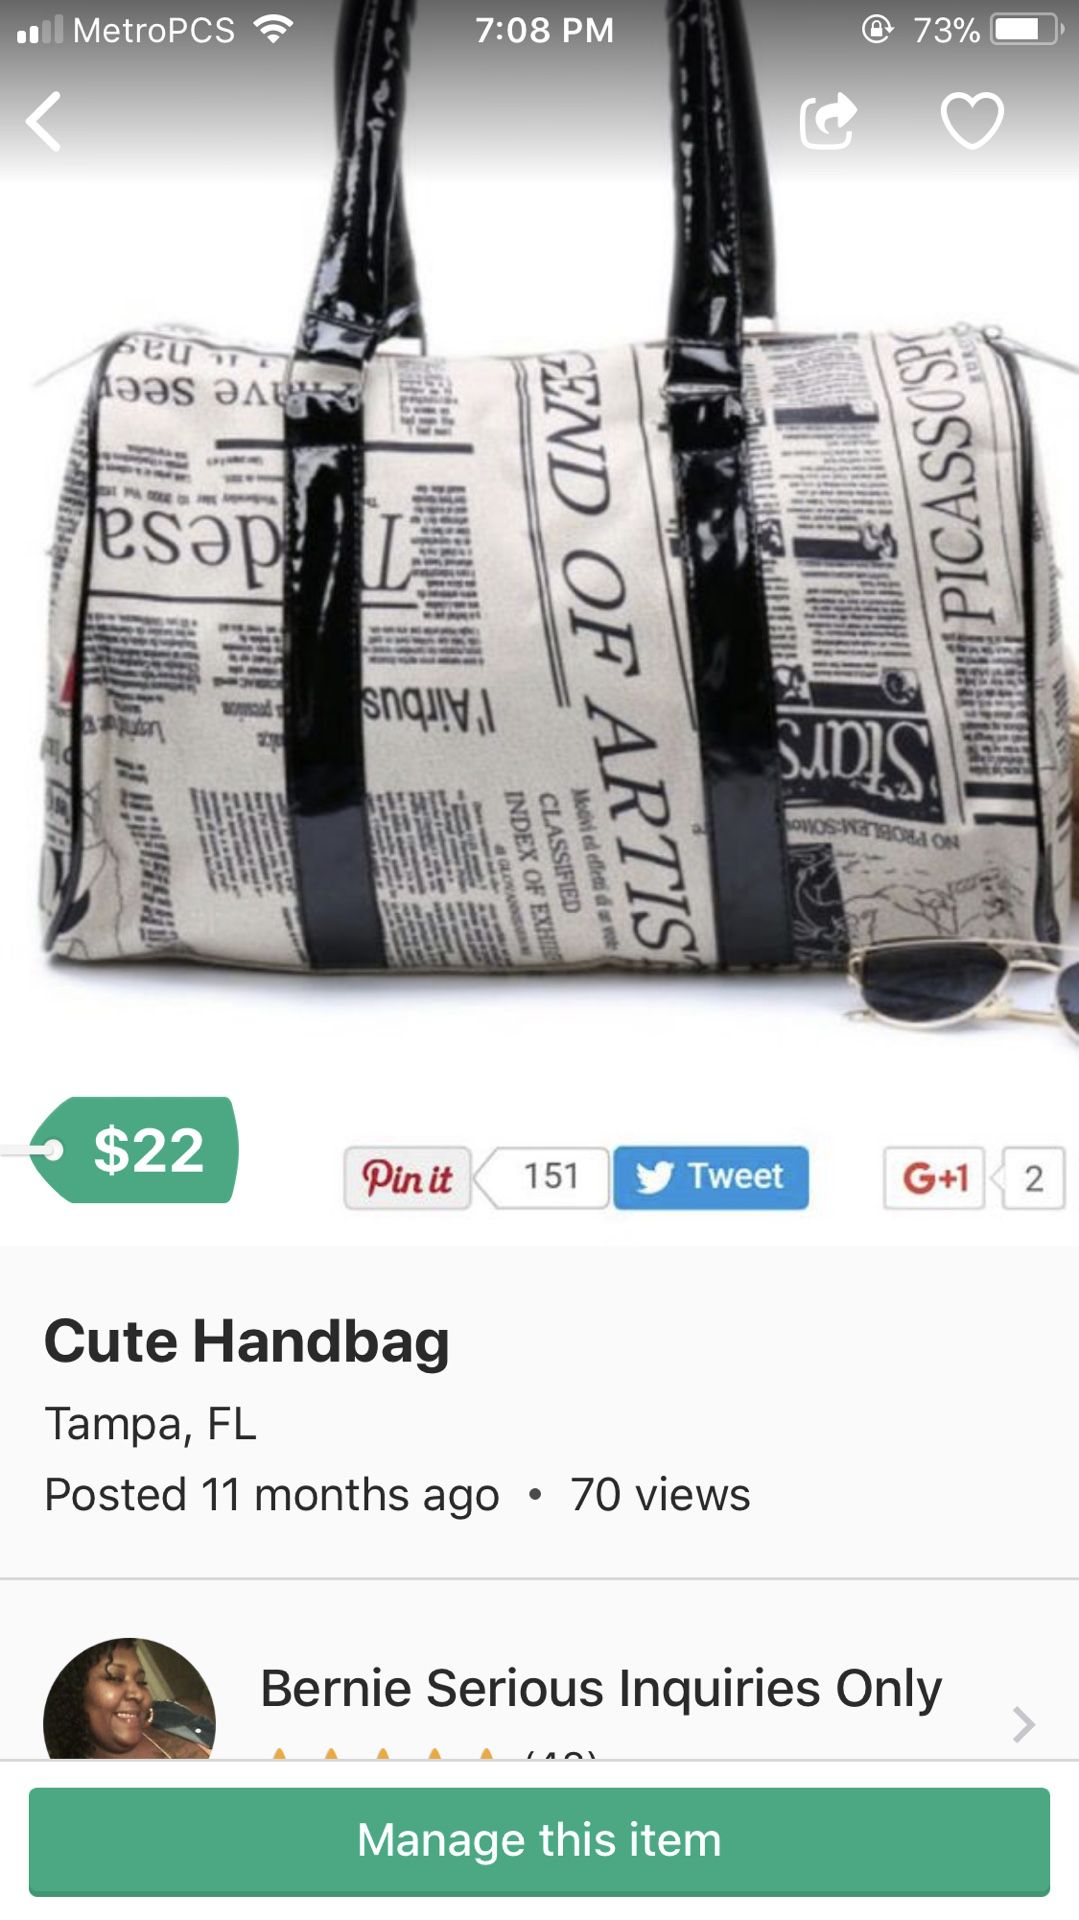 Cute Handbag (Price Reduced)